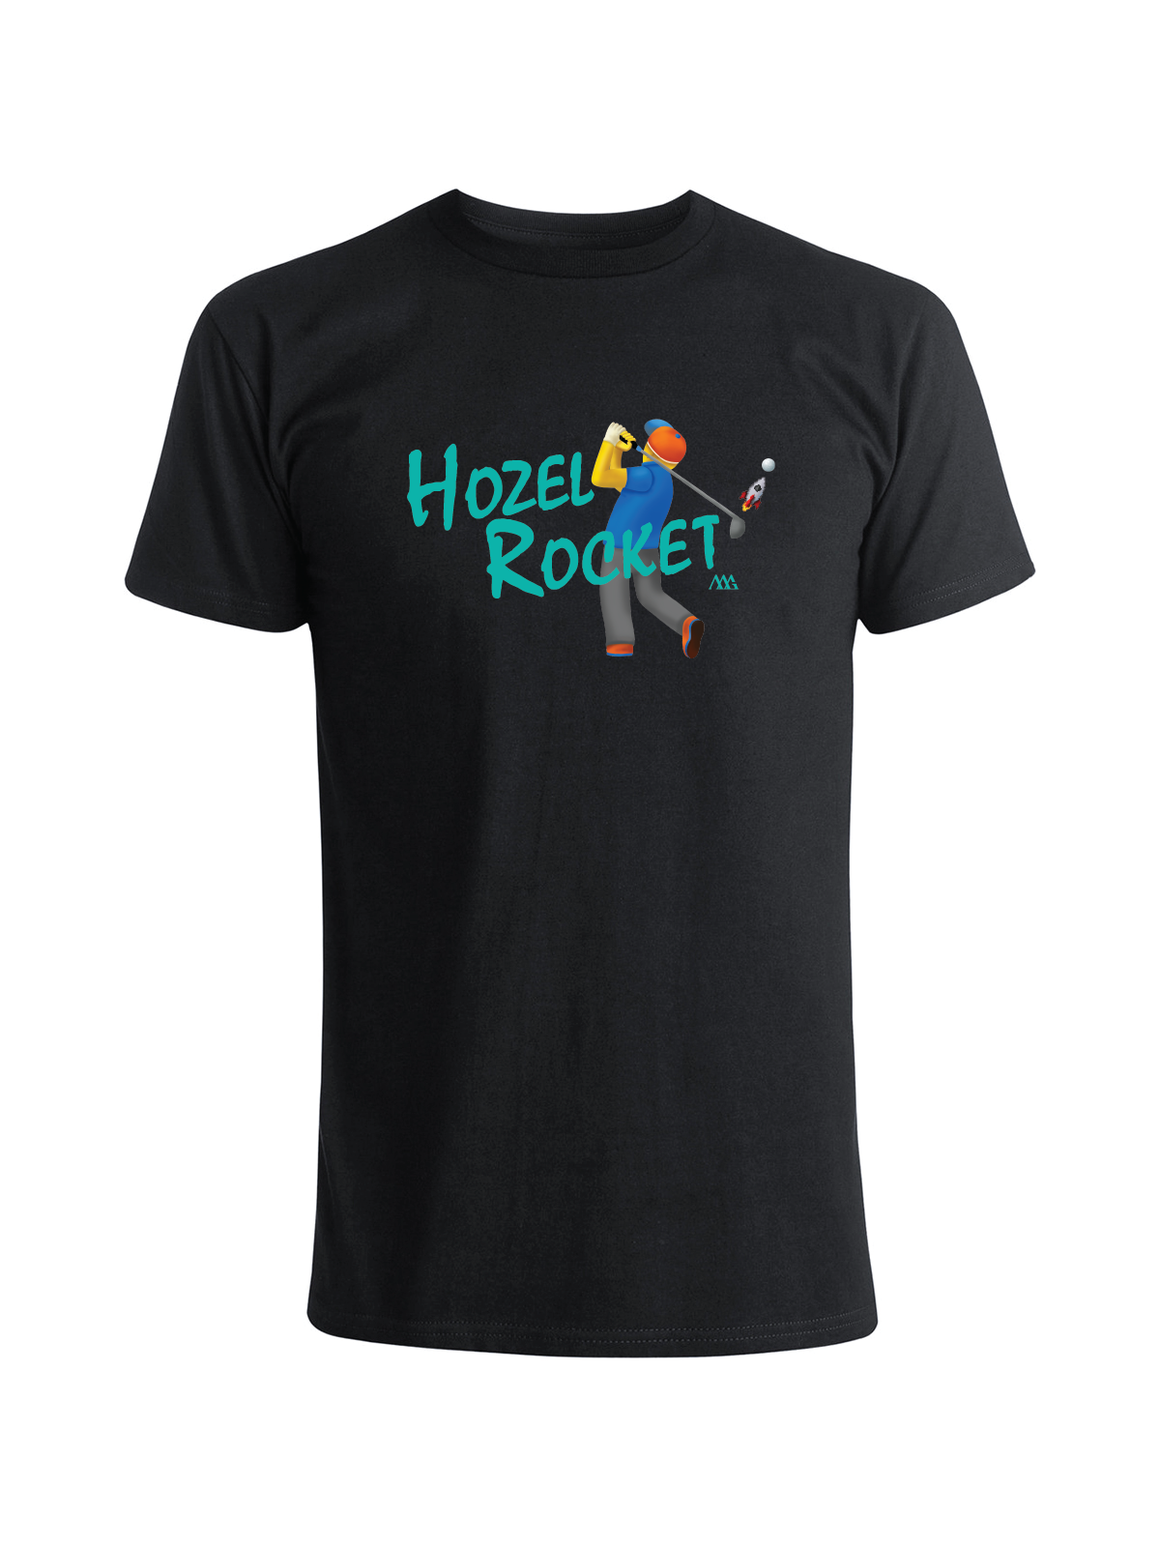 Hozel Rocket Tee Shirt -  Black (Kauai)